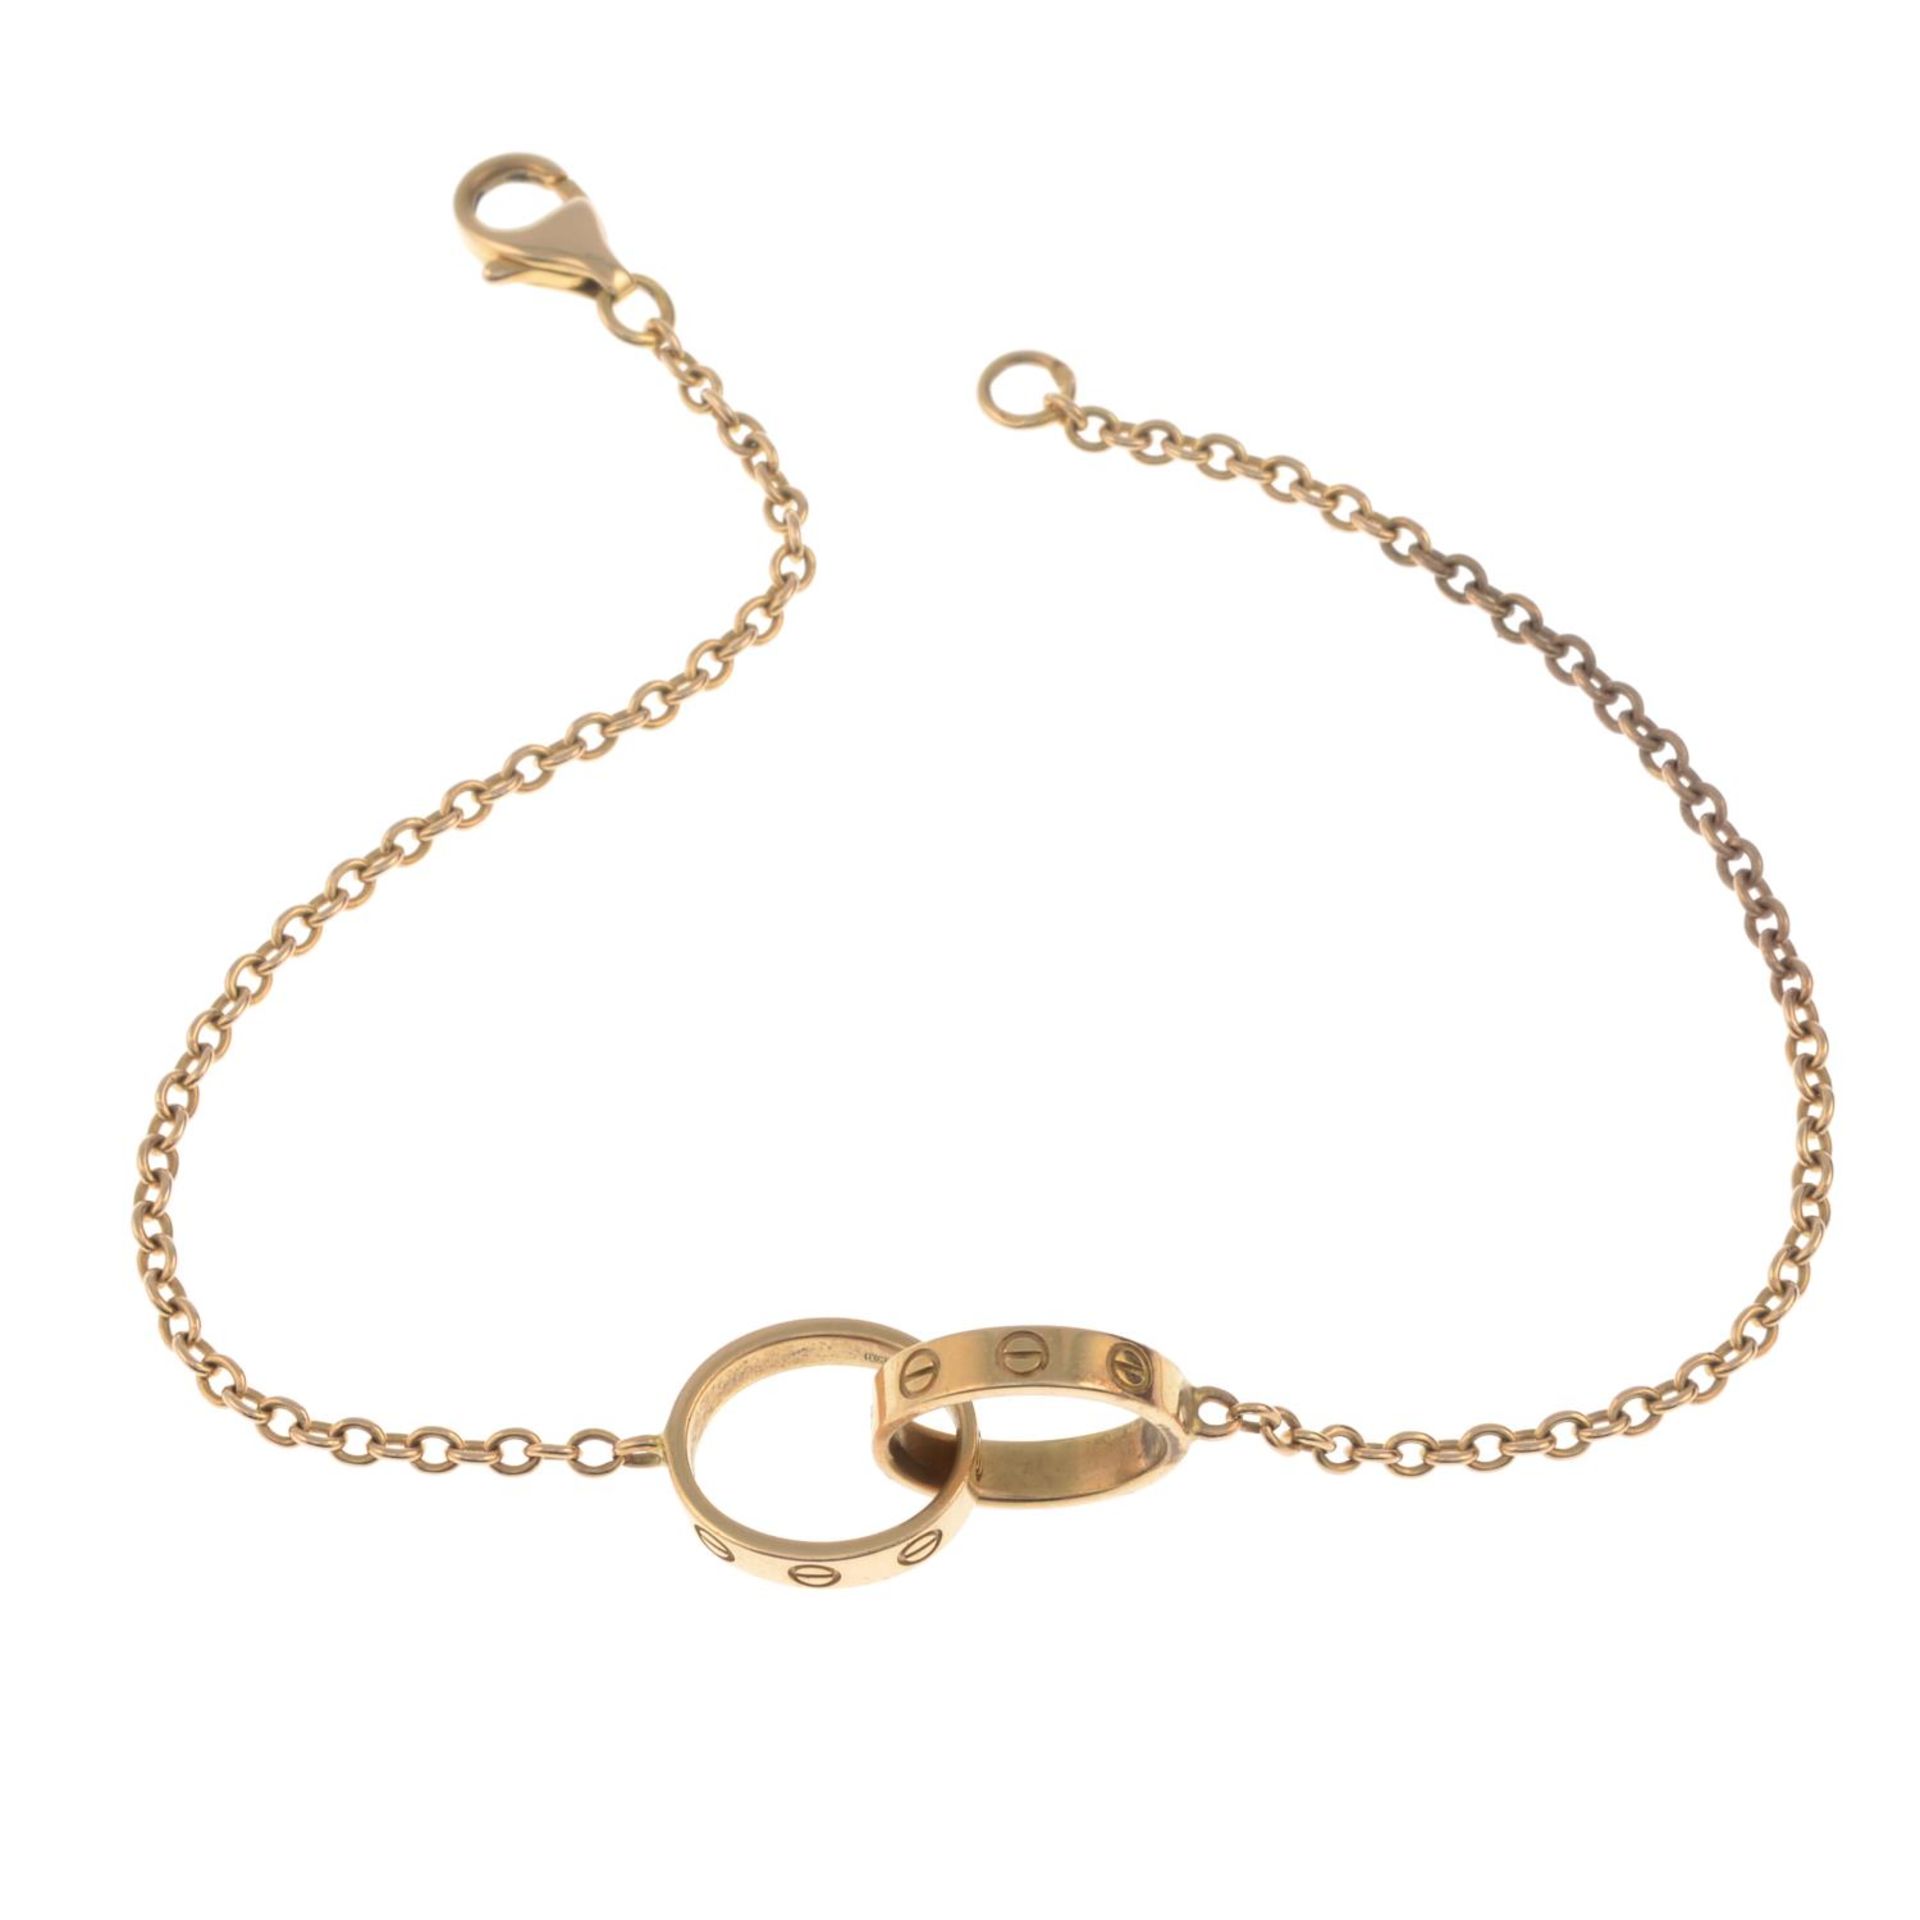 CARTIER - an 18ct gold 'Love' bracelet. - Image 2 of 4